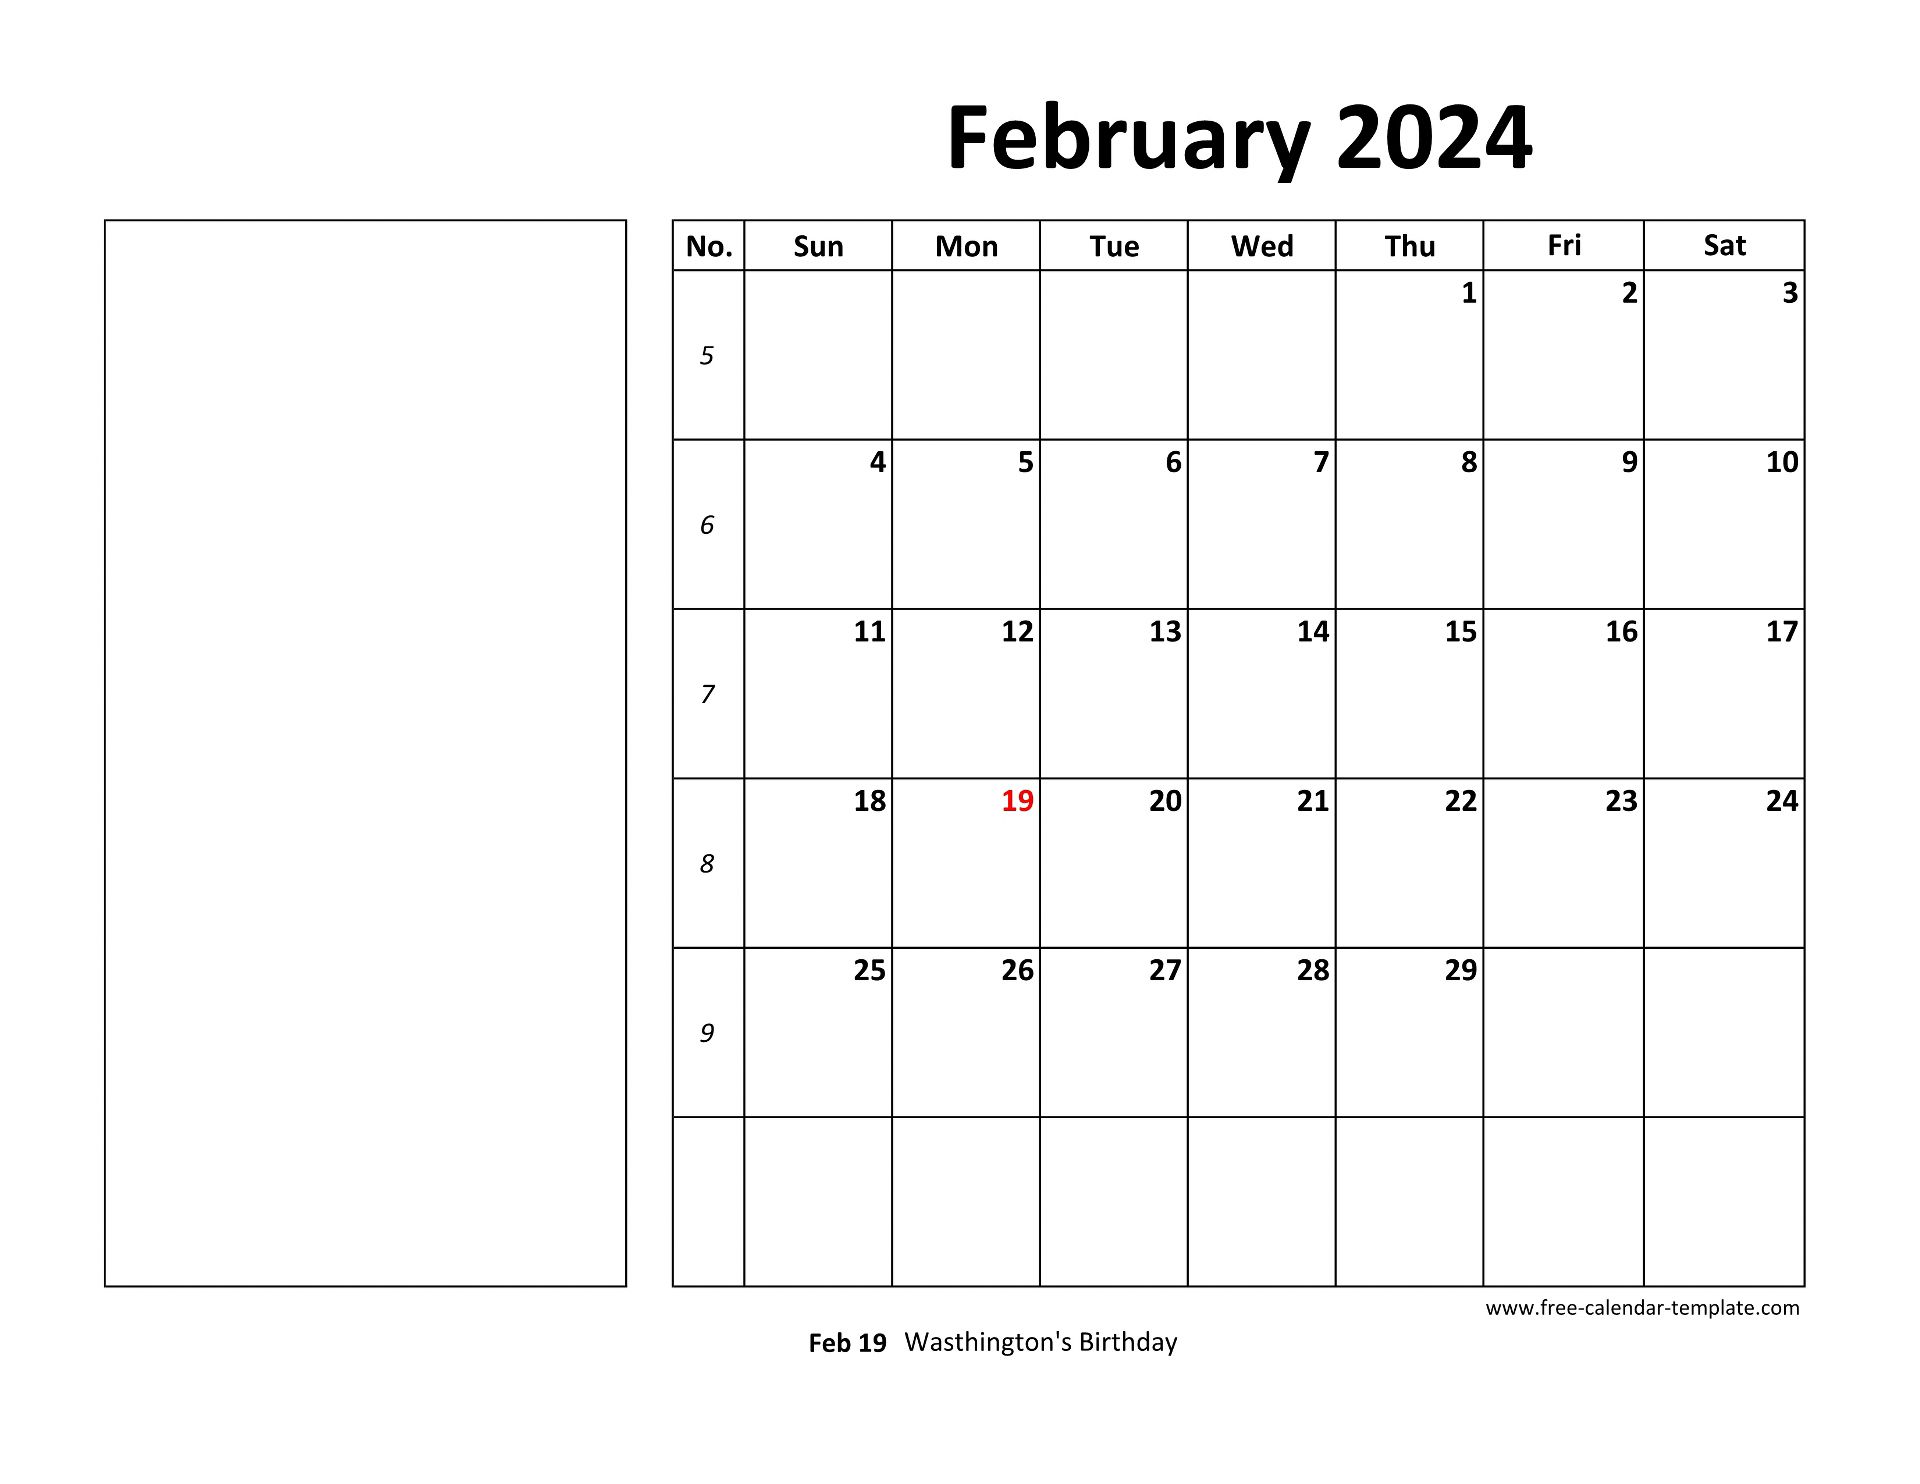 february-2024-free-calendar-tempplate-free-calendar-template